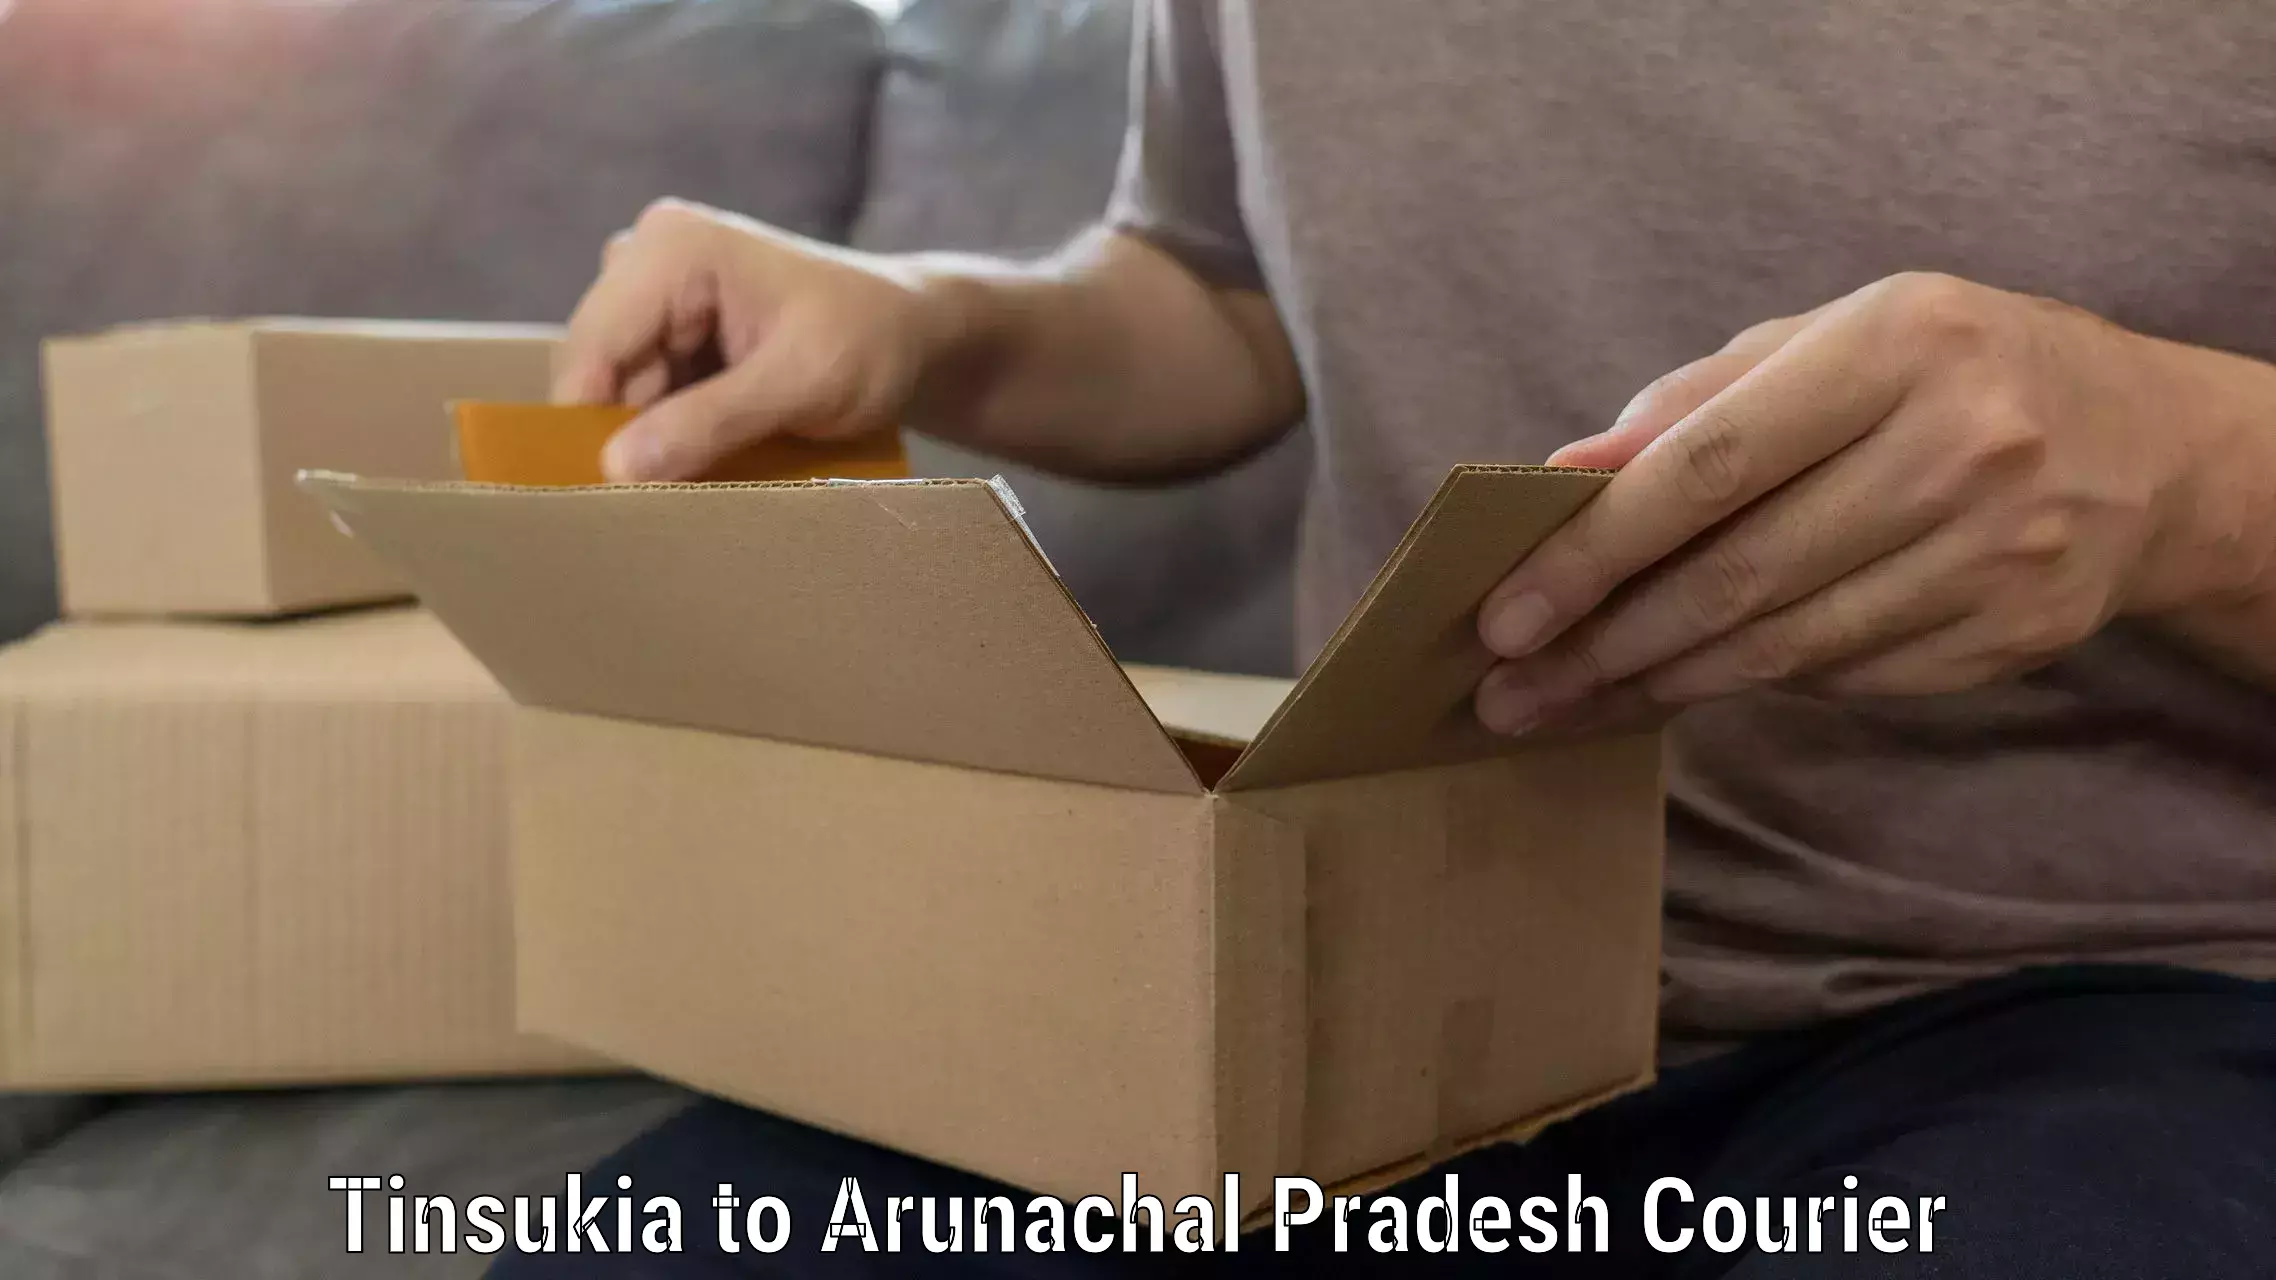 Trusted relocation experts Tinsukia to Arunachal Pradesh